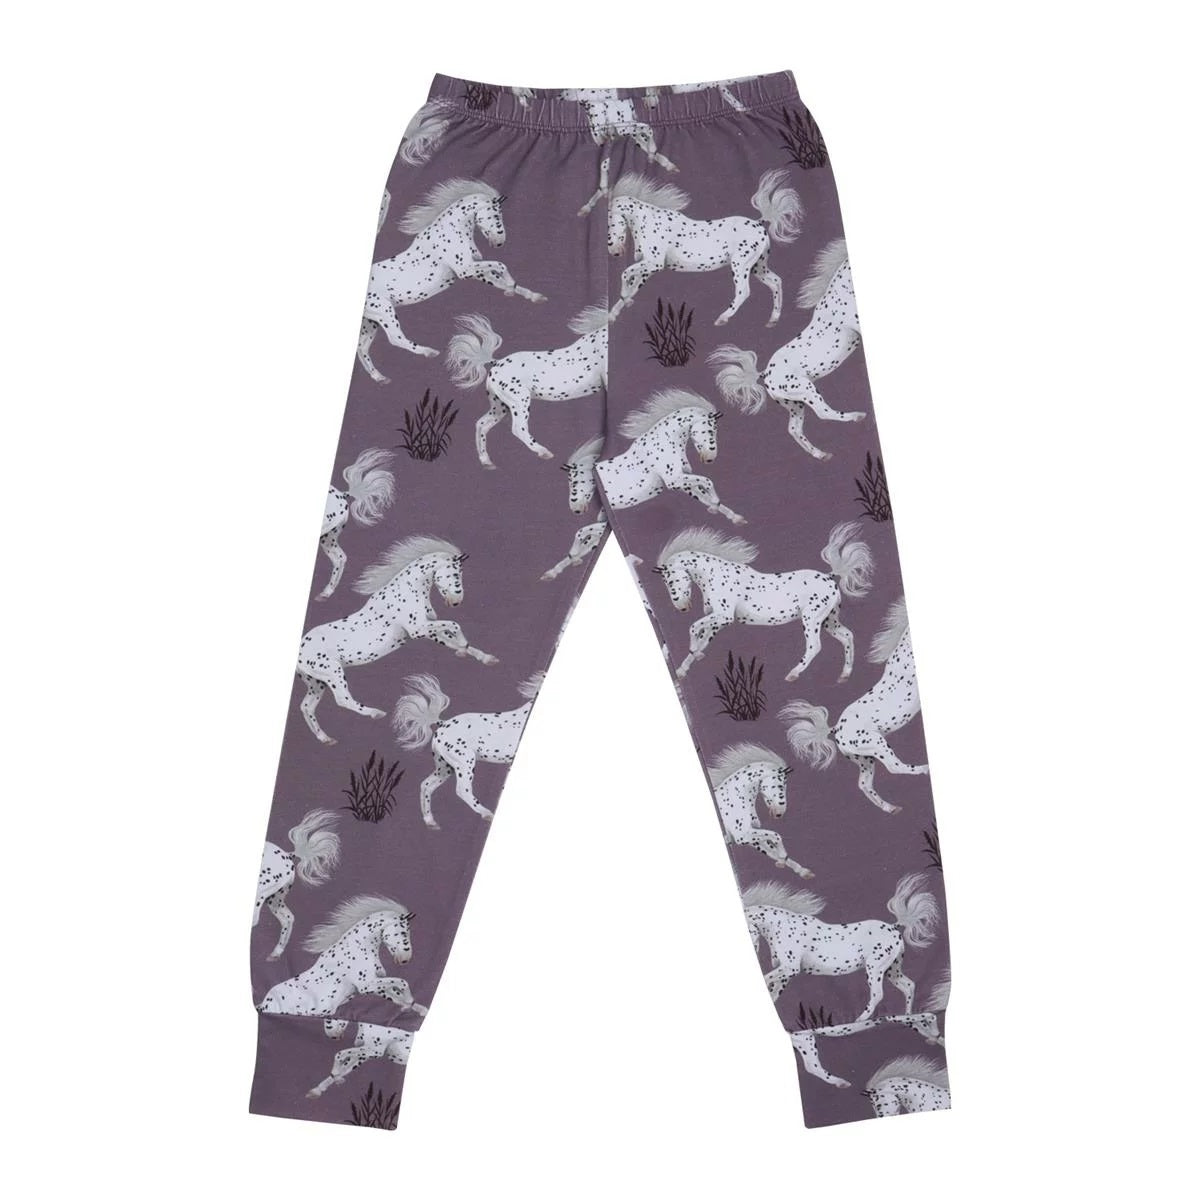 Walkiddy - Schimmel Horses Jersey Pajamas LS